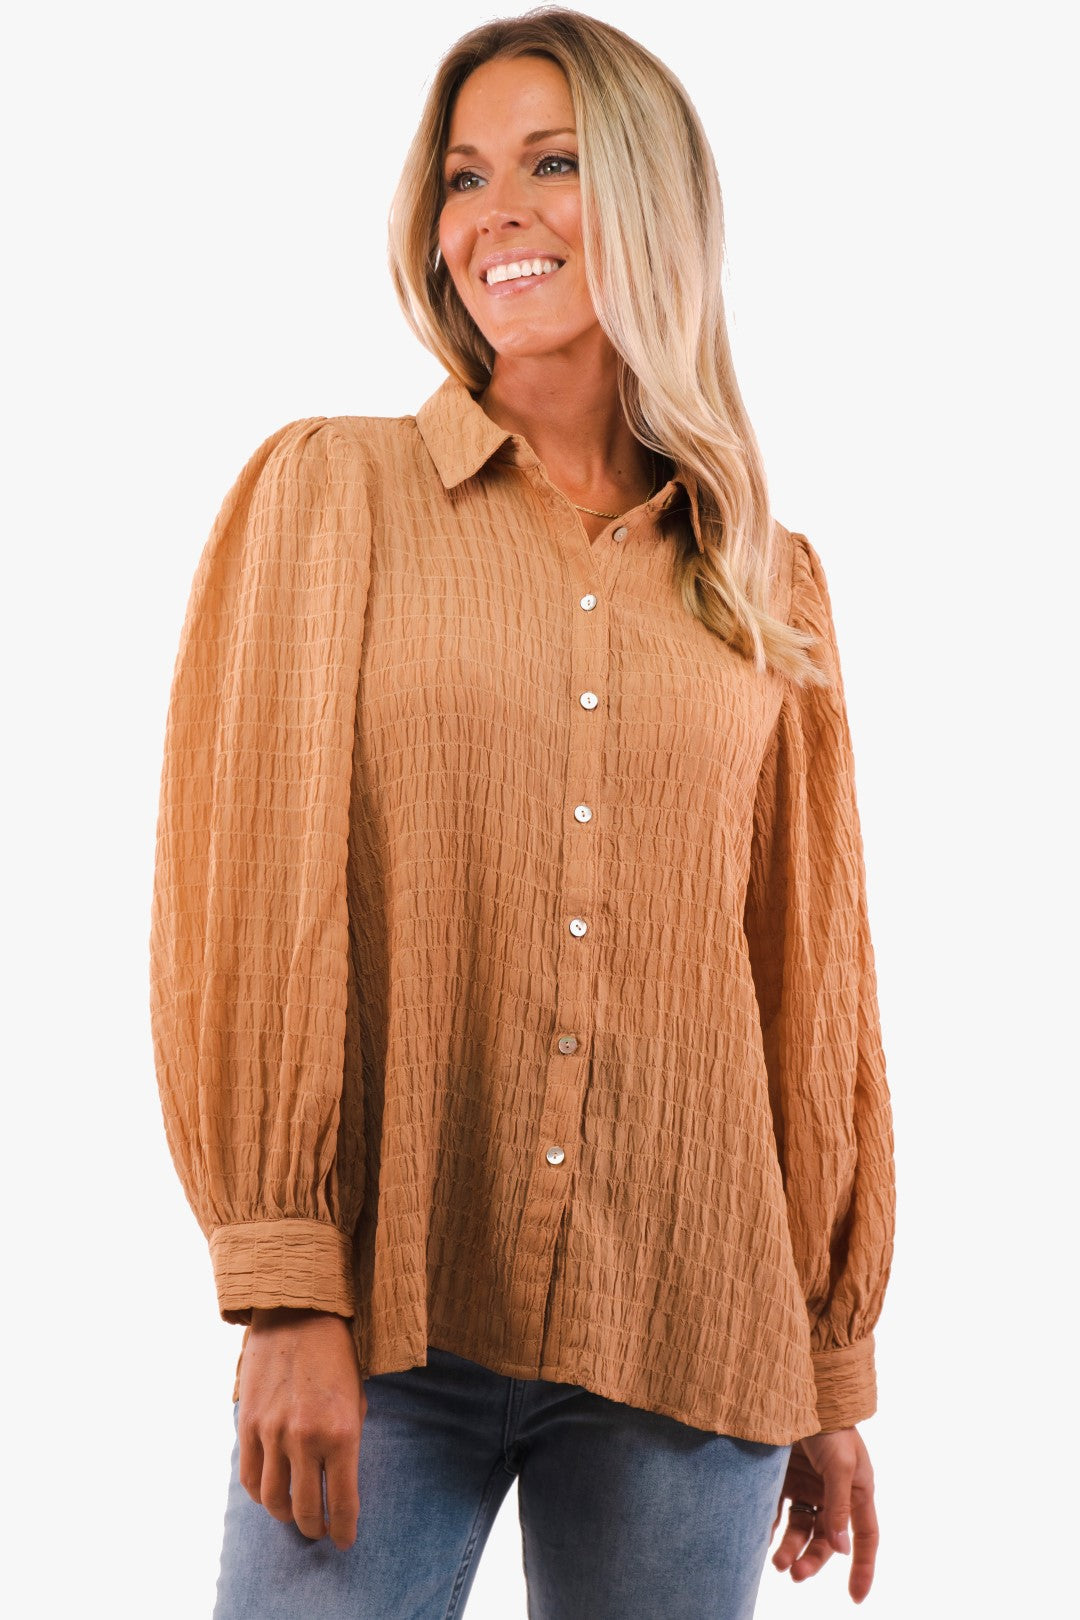 Esqualo blouse in Camel color